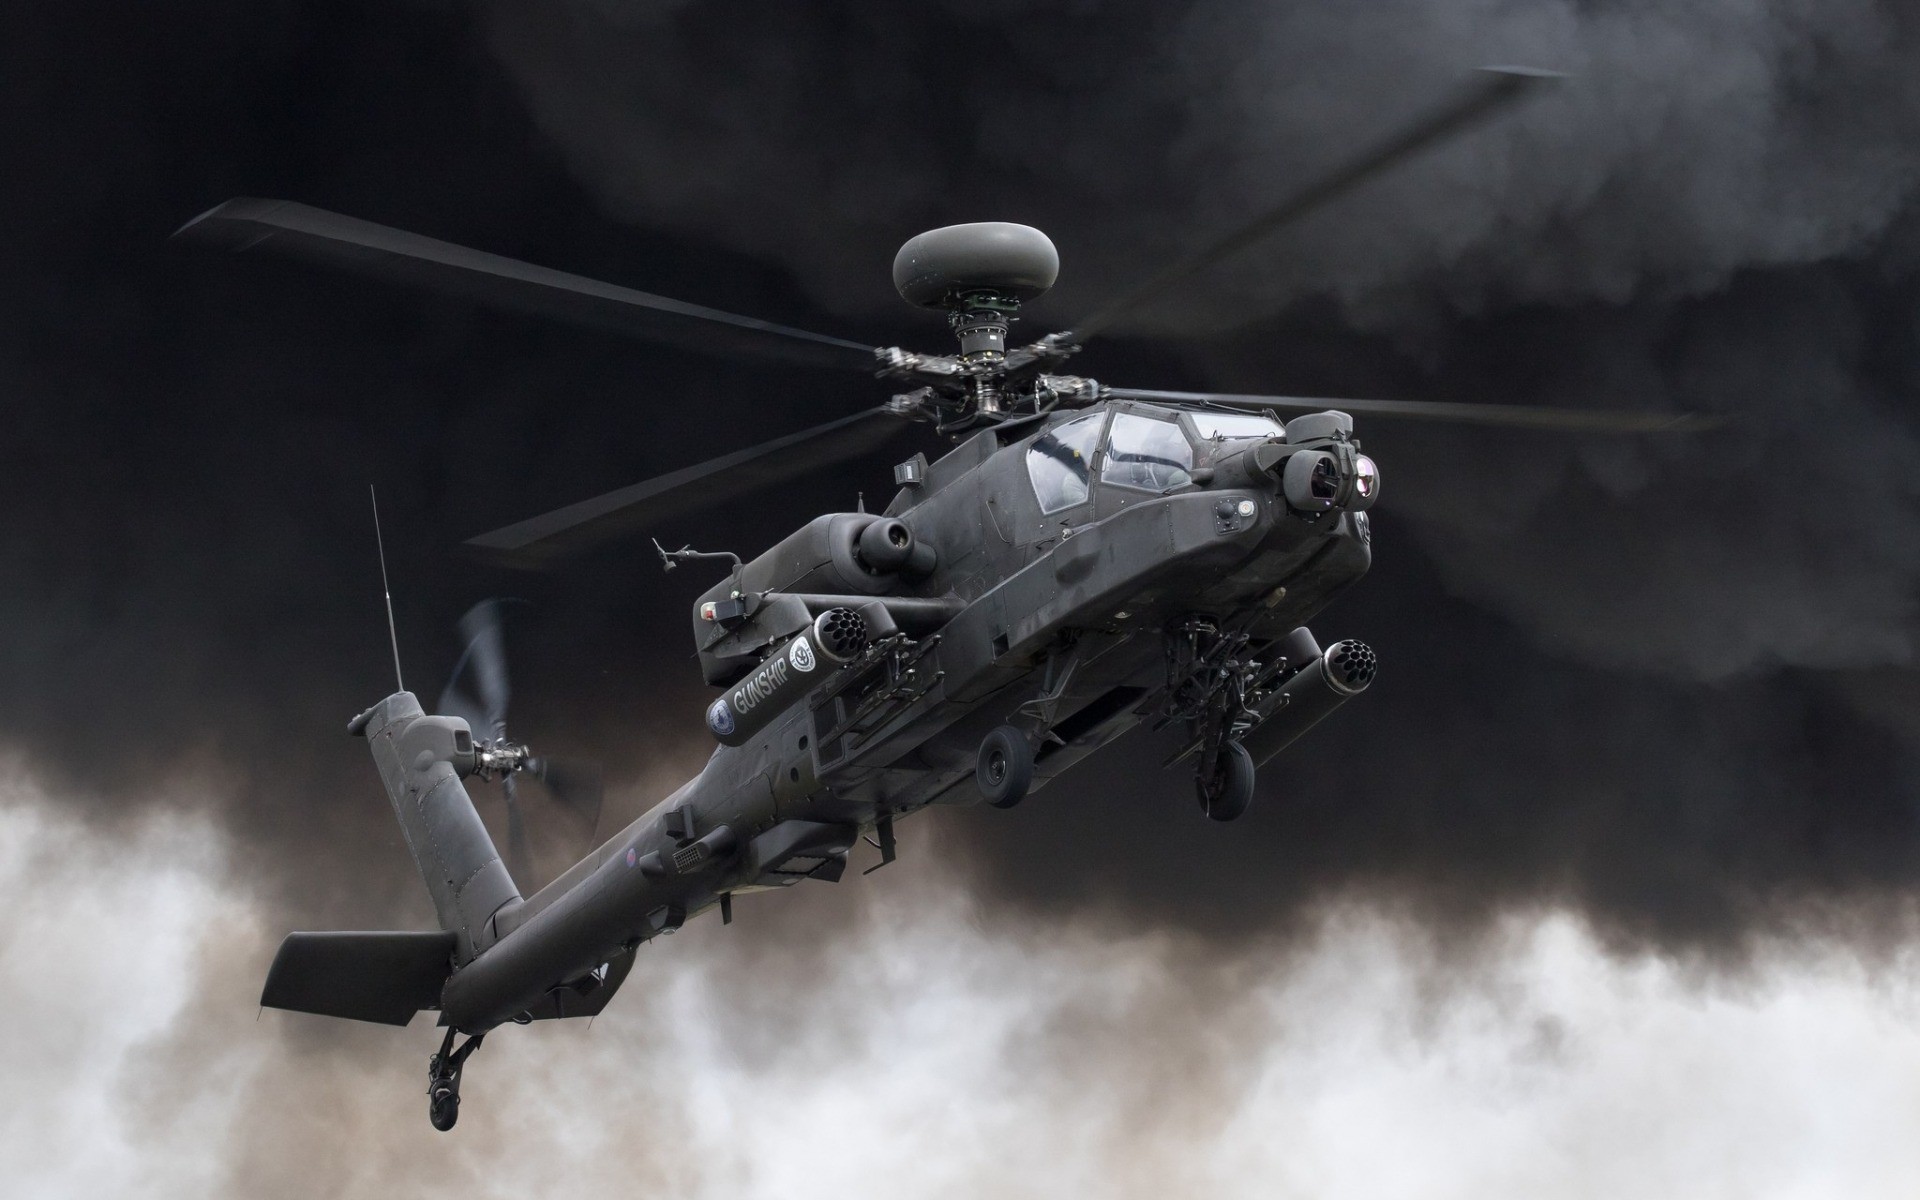 ah fondo de pantalla,helicóptero,rotor de helicóptero,aeronave,helicóptero militar,vehículo